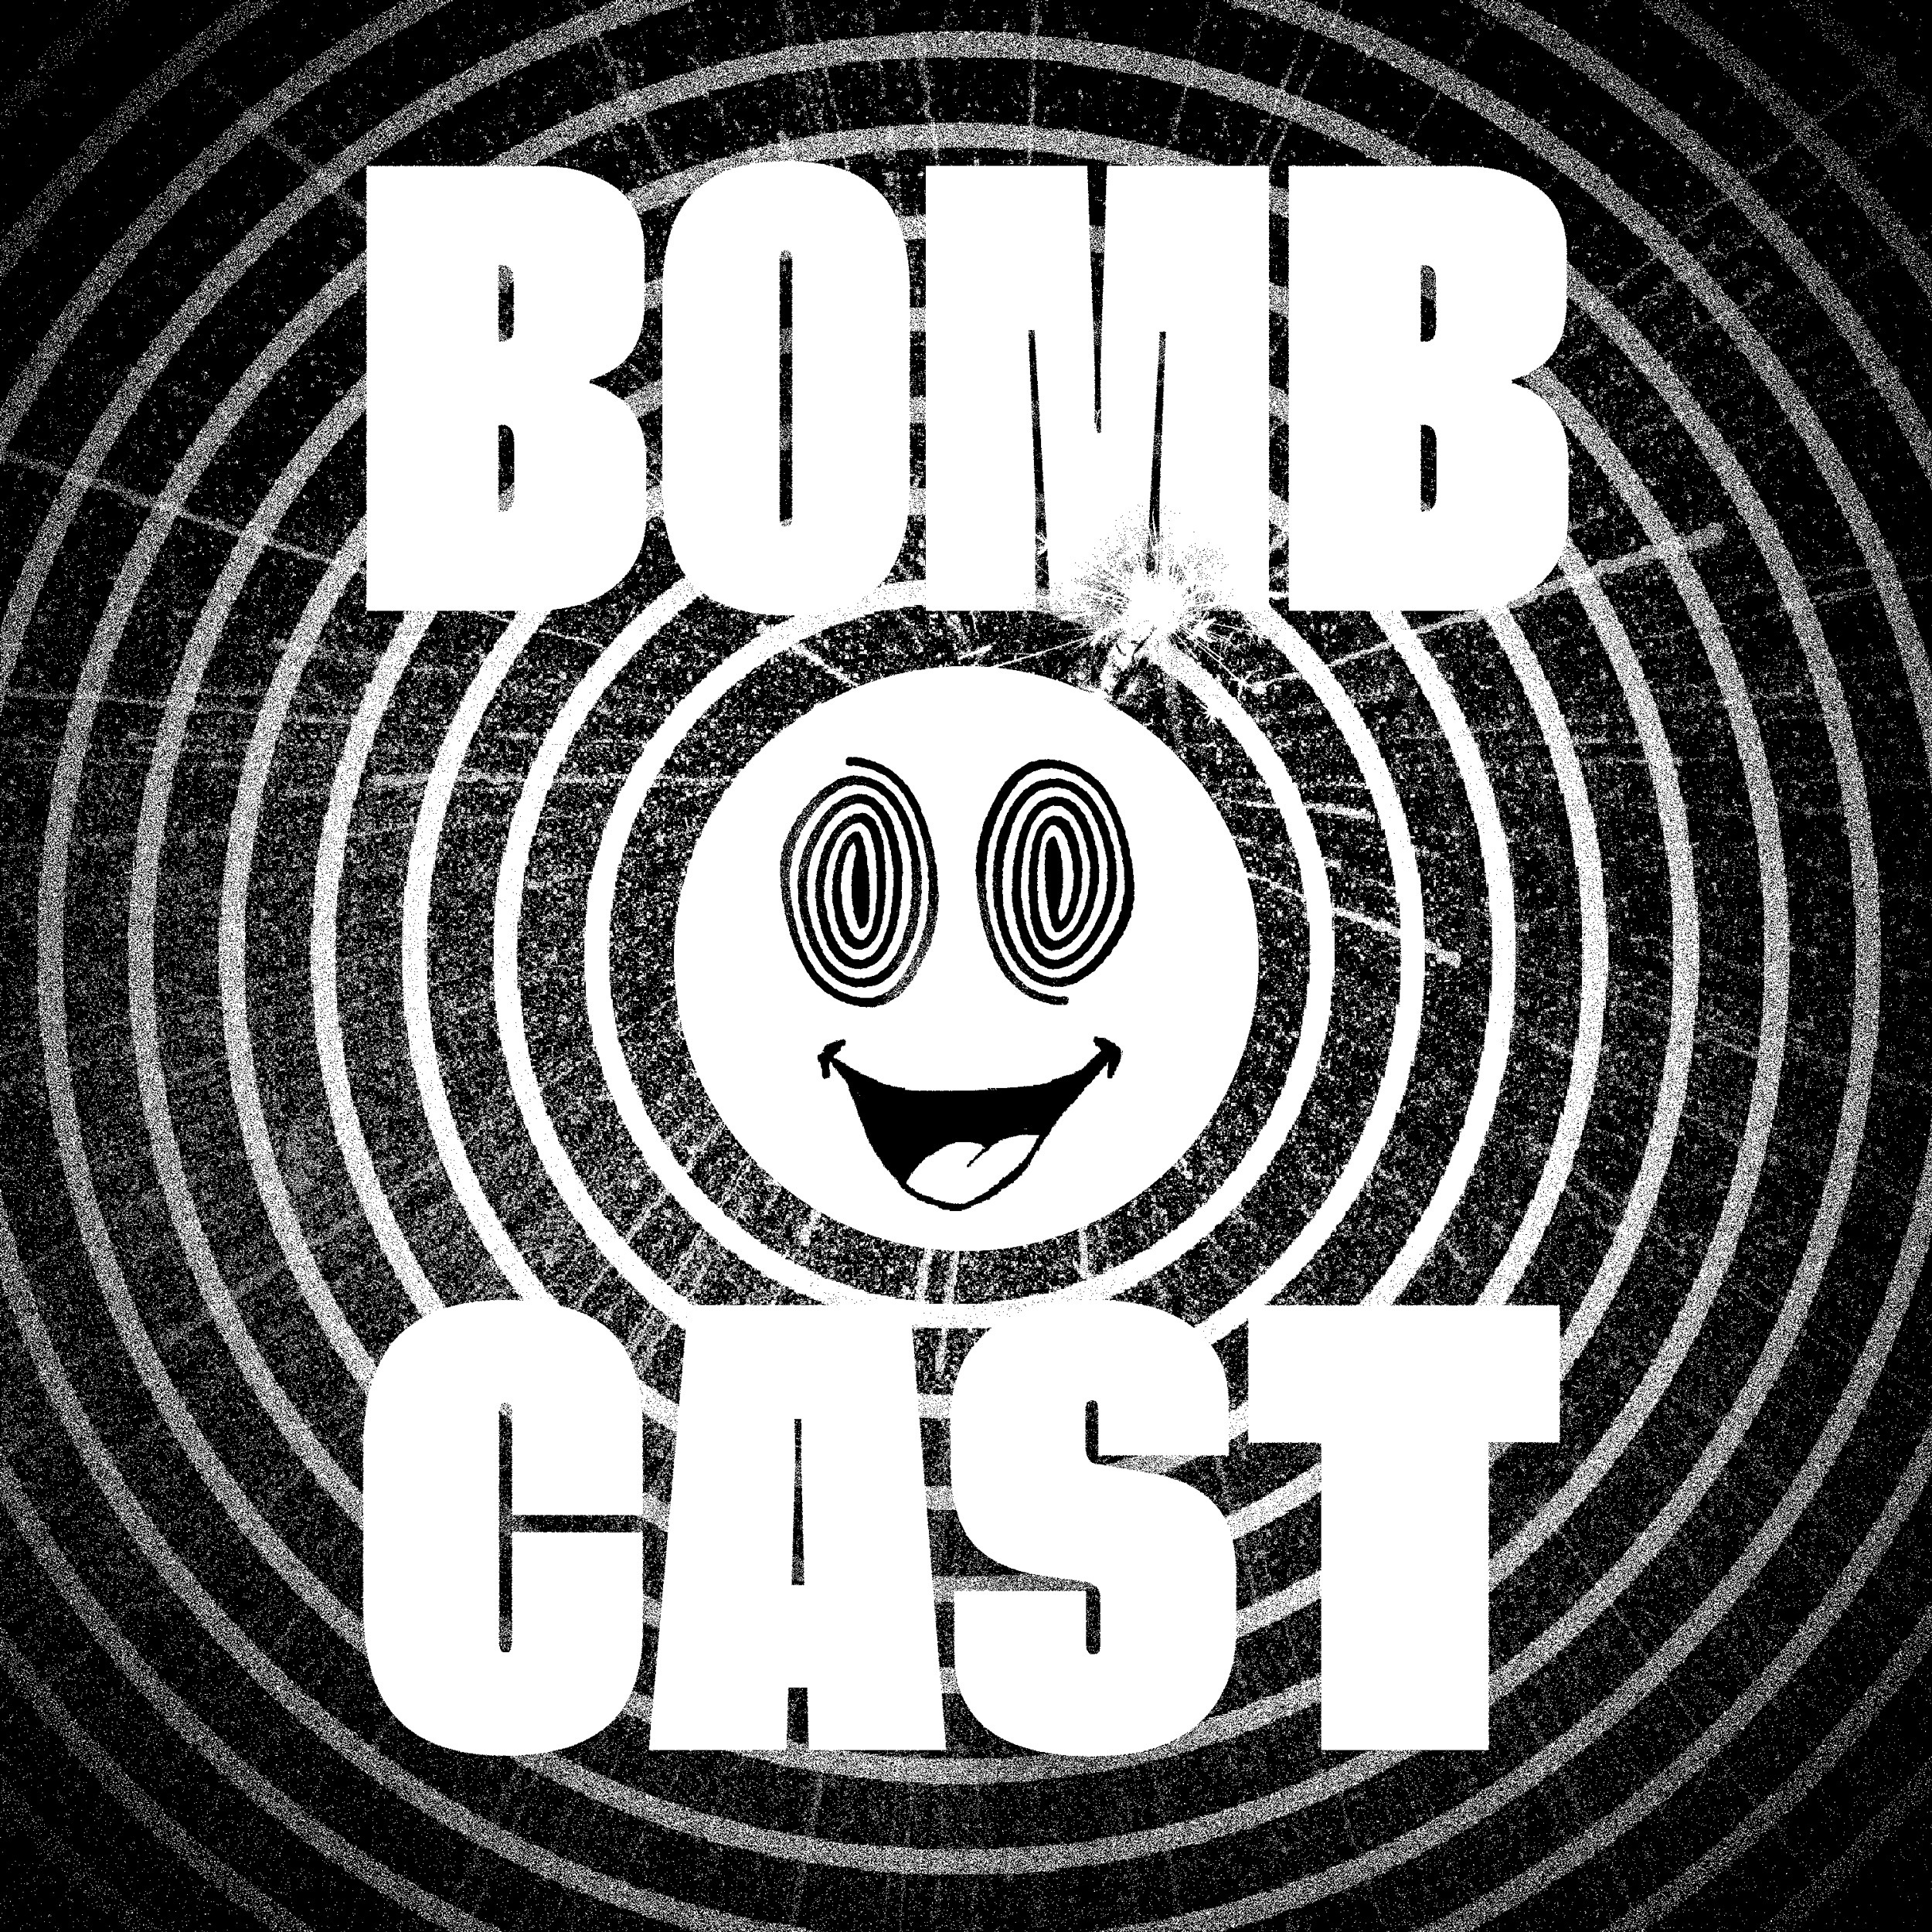 Giant Bombcast podcast